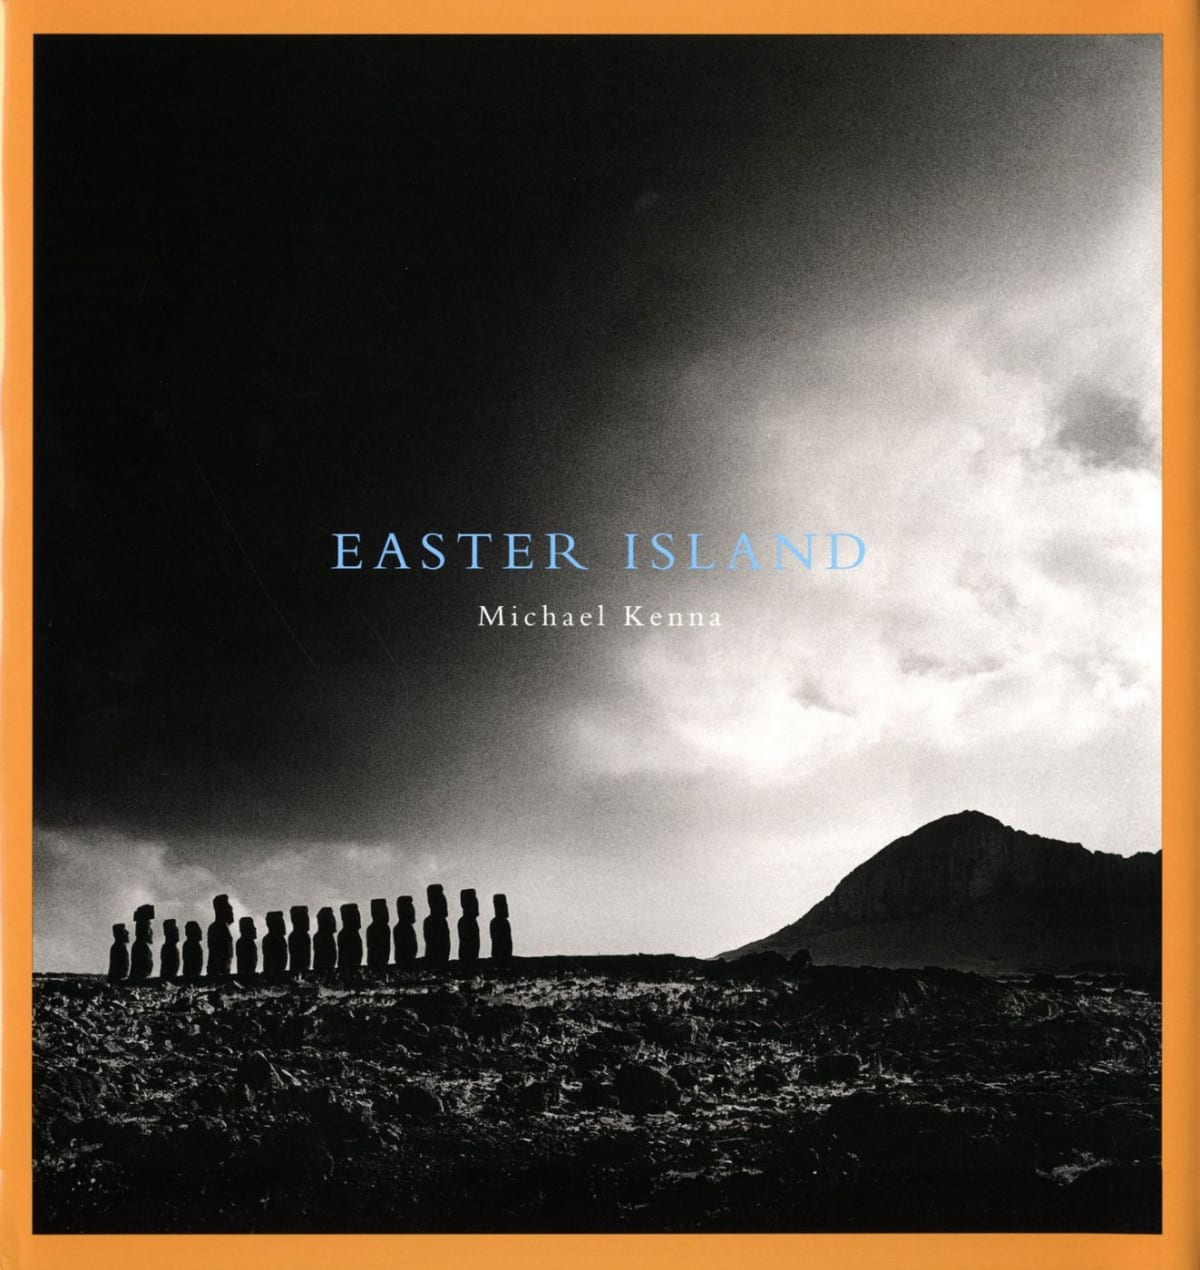 Publication: Easter Island - Michael Kenna | Robert Klein Gallery